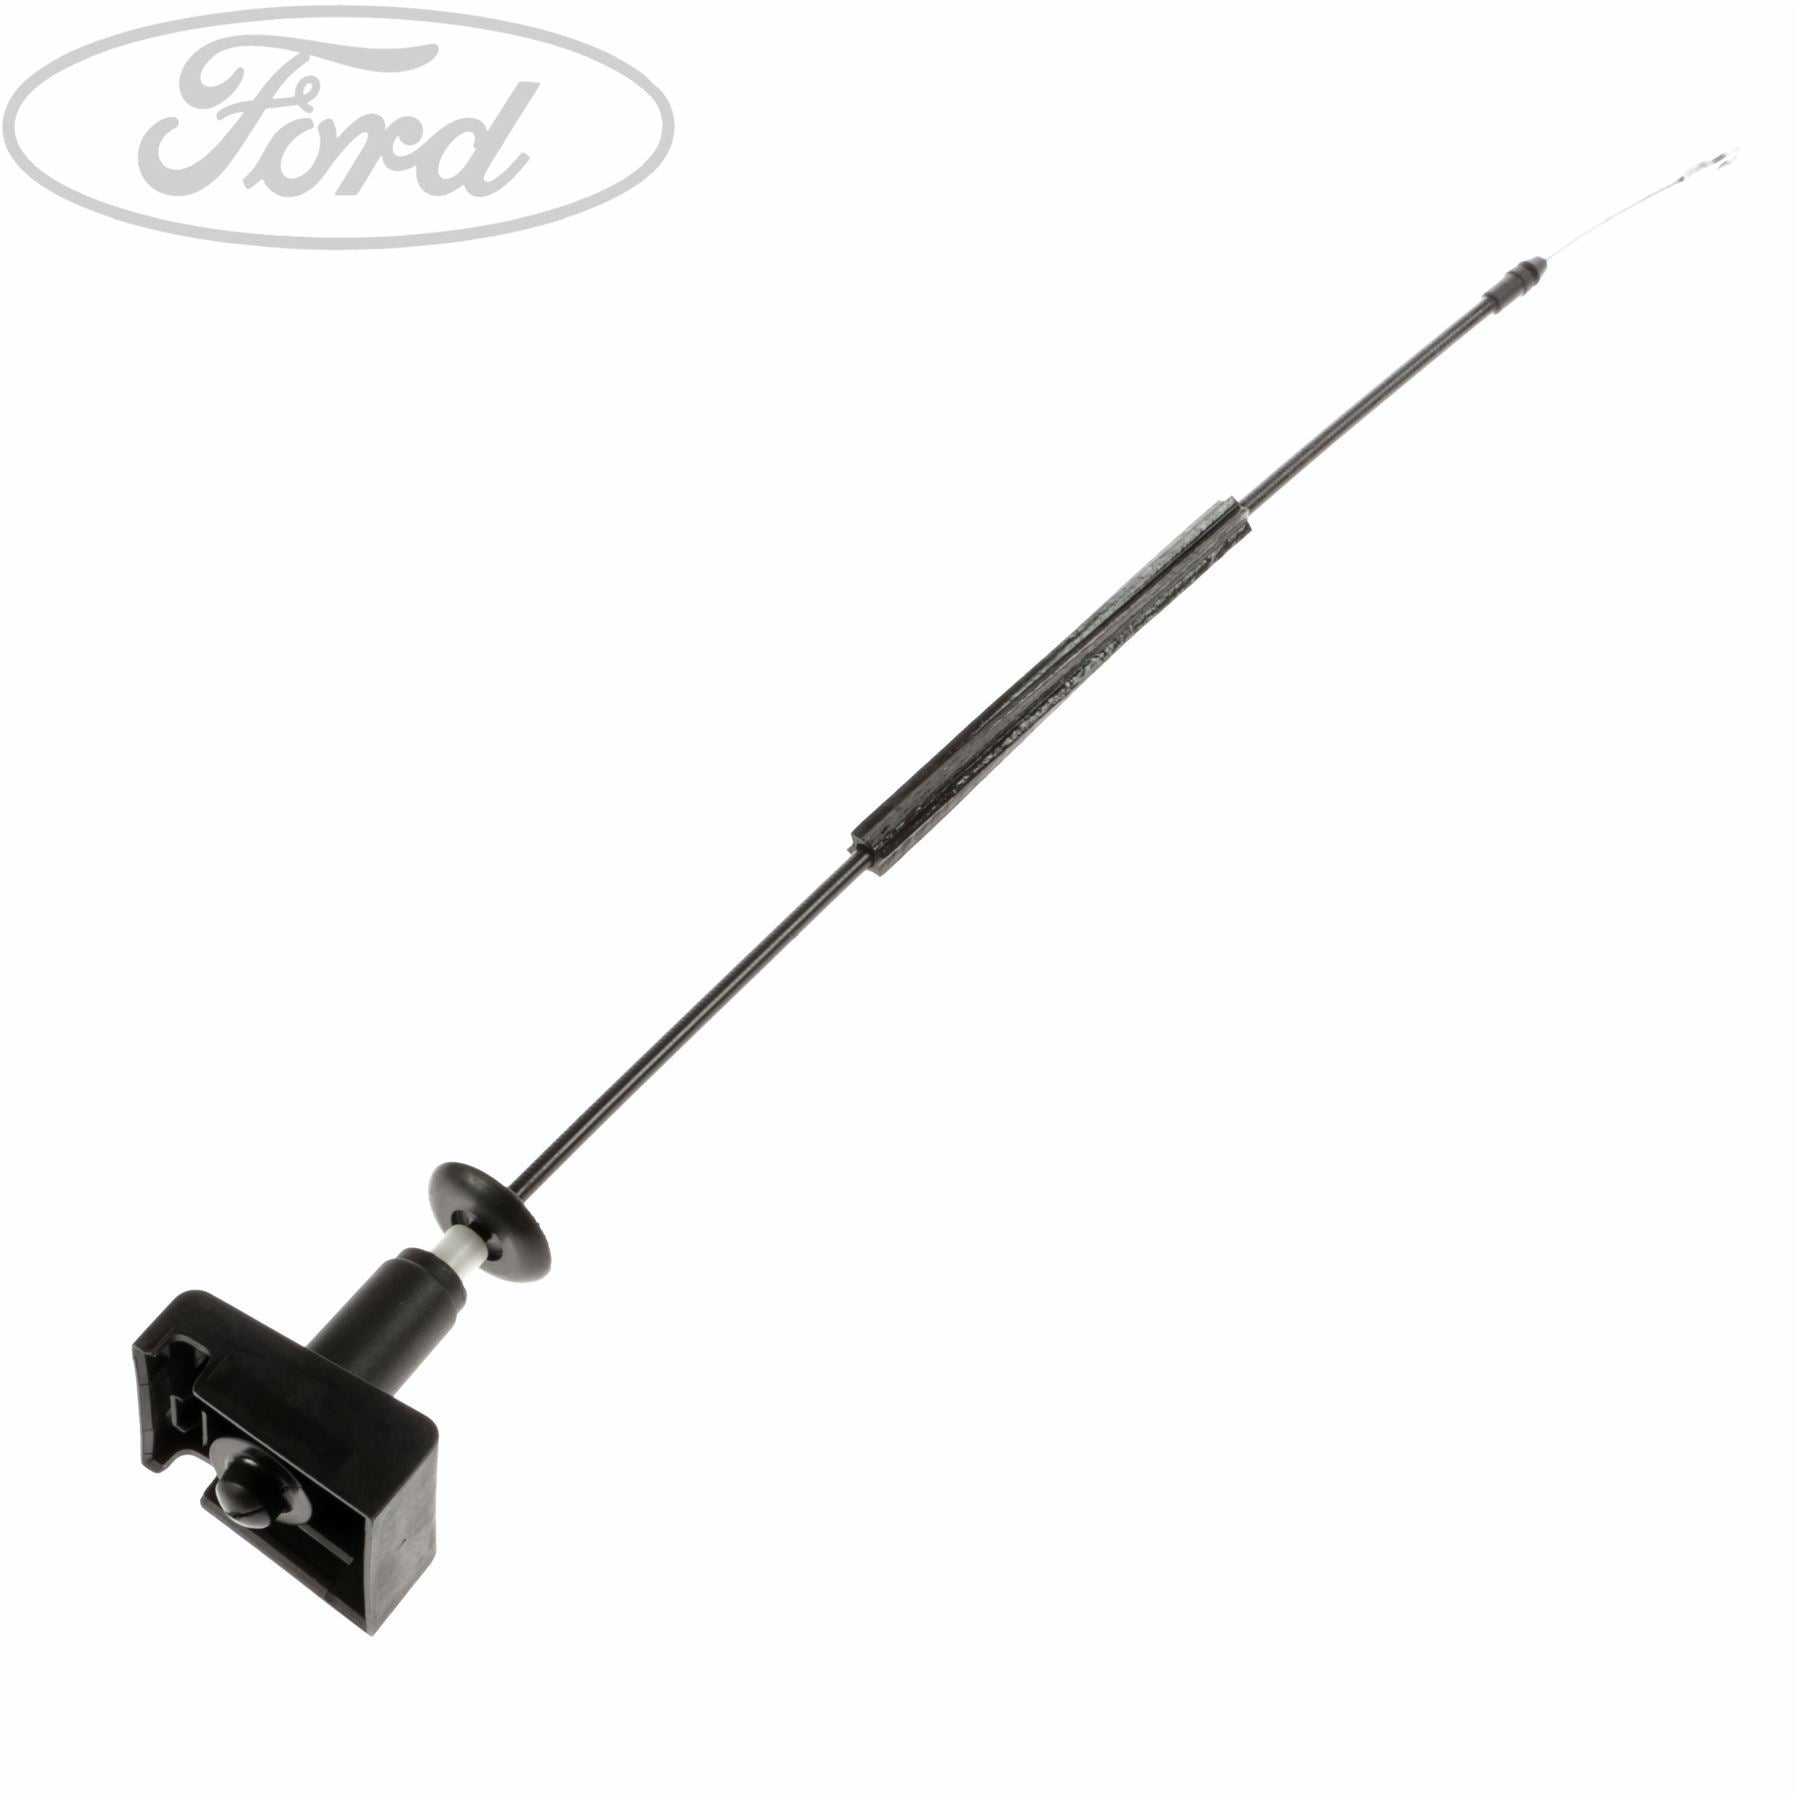 Ford, TRANSIT MK1 CONNECT FUEL TANK FILLER DOOR LATCH